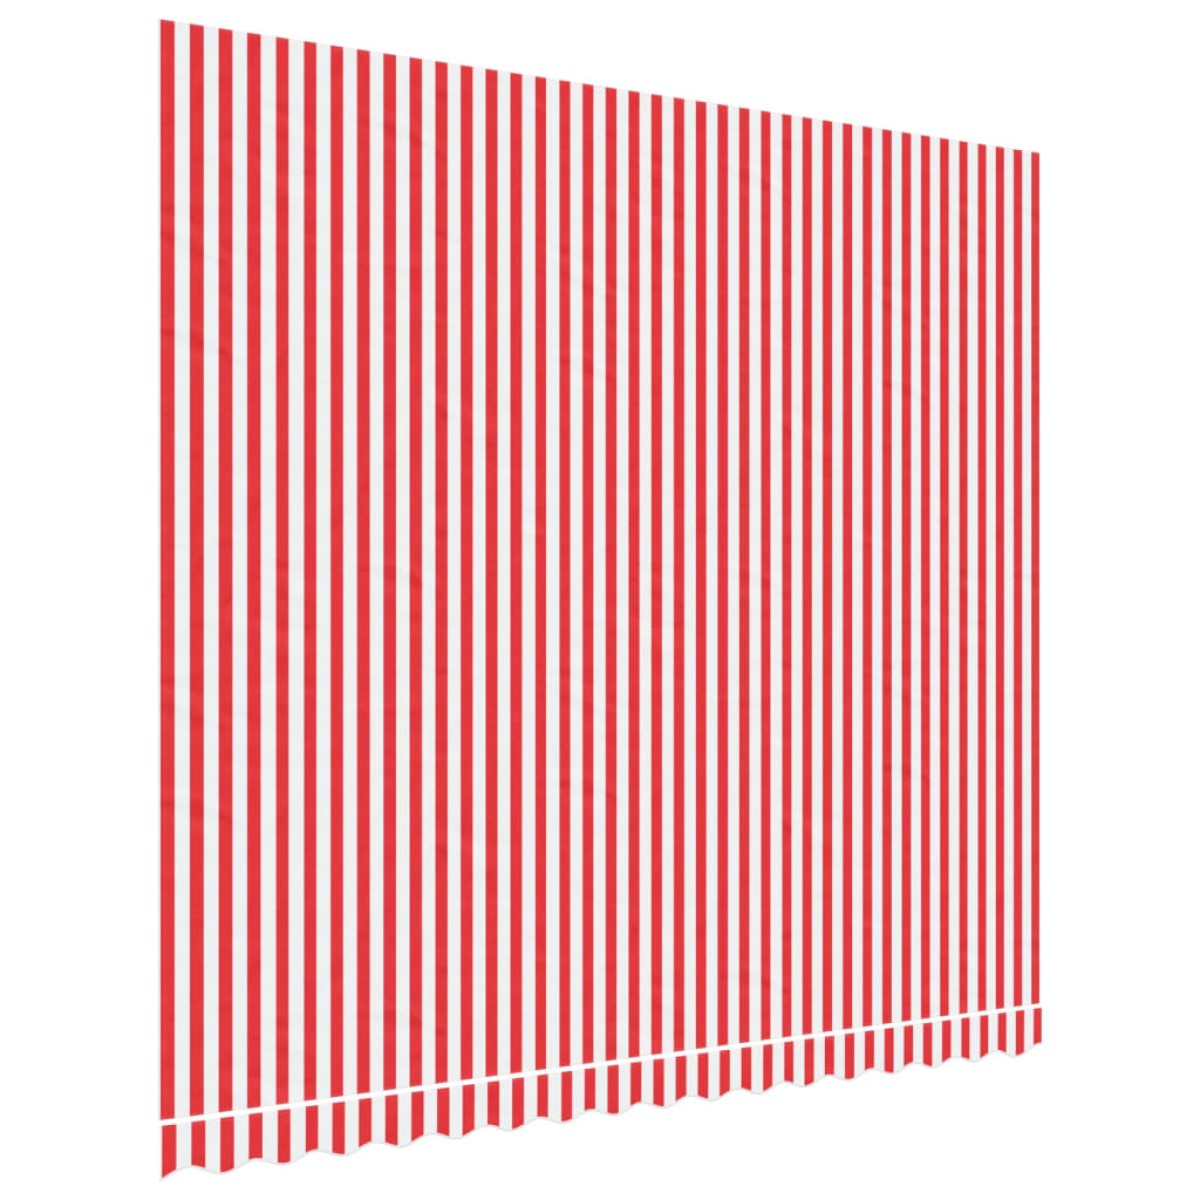 vidaXL Τεντόπανο Ανταλλακτικό Ριγέ Κόκκινο / Λευκό 4 x 3,5 μ.